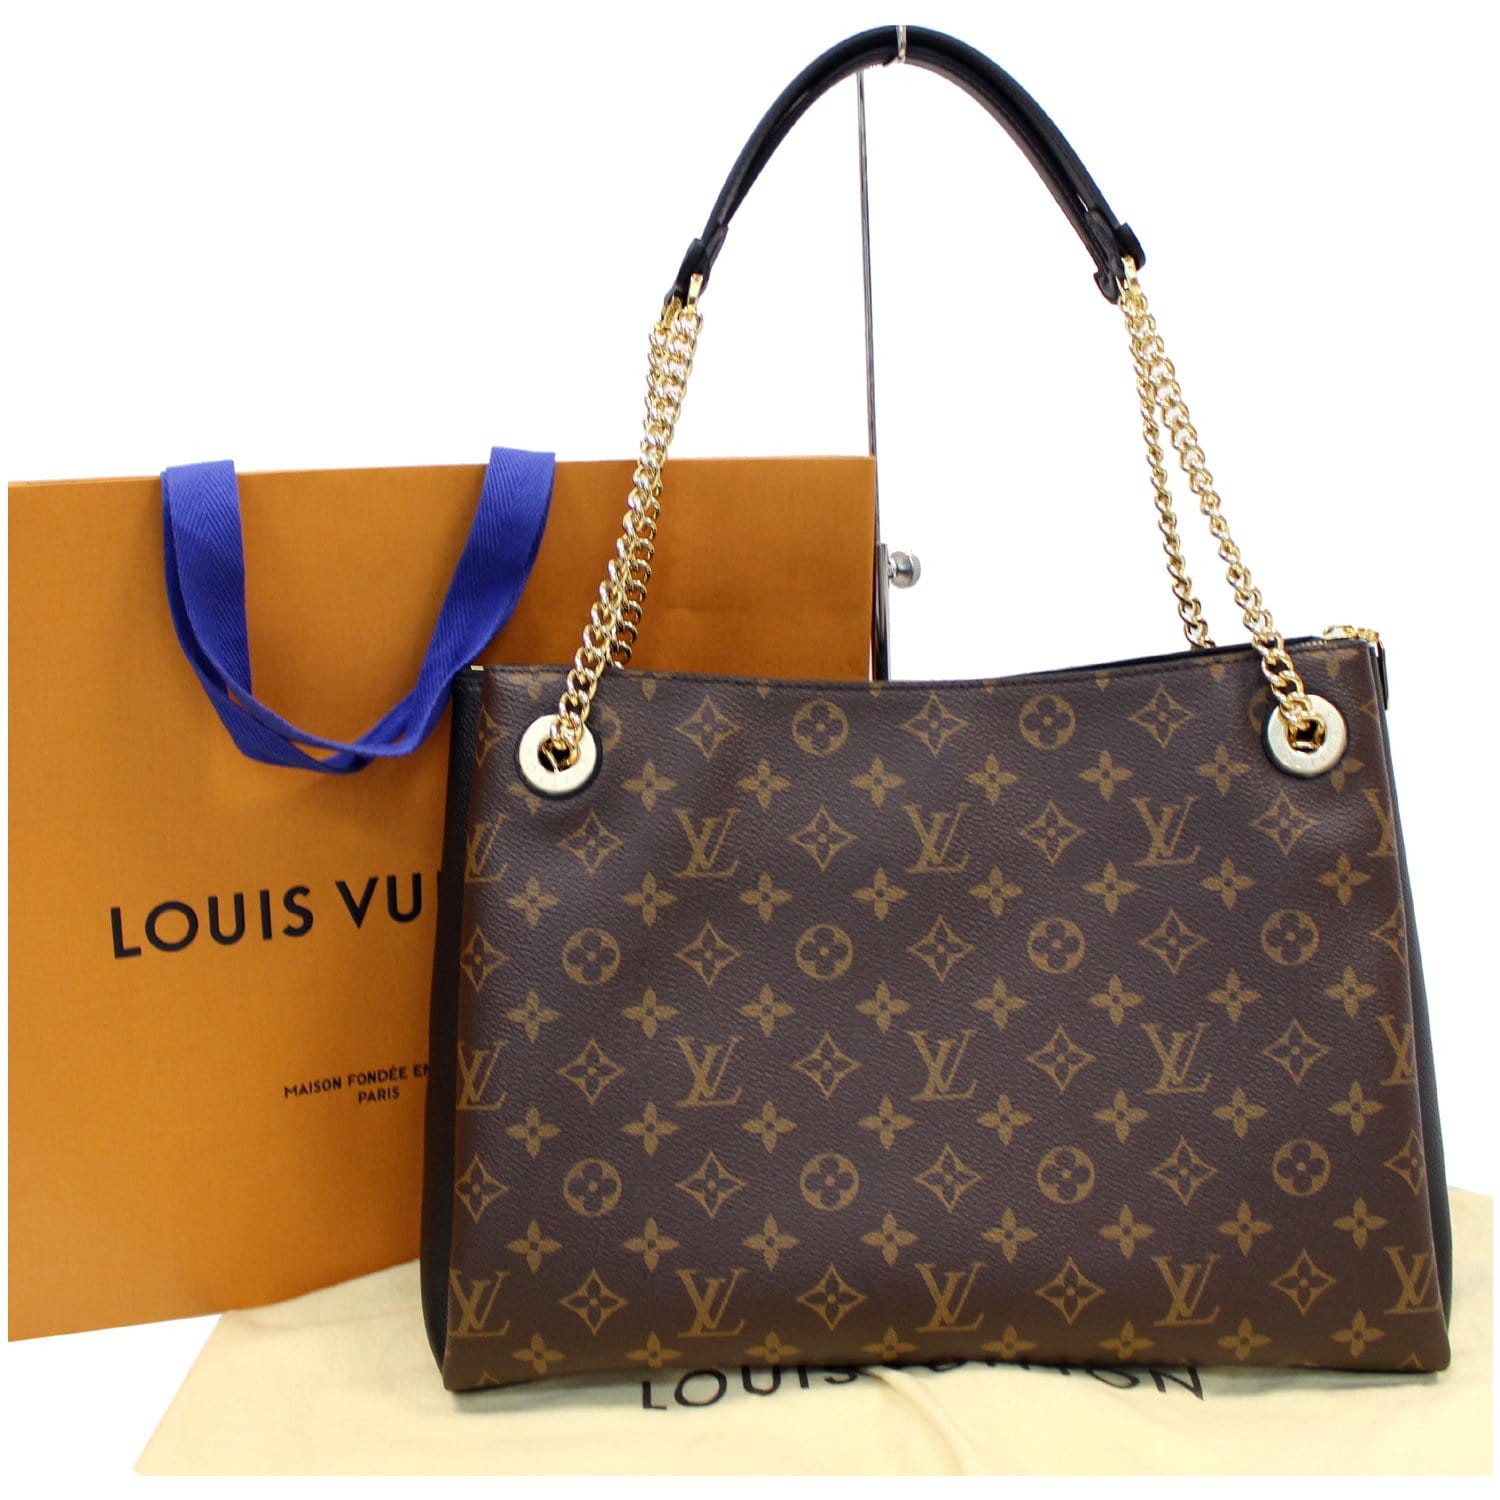 ✨DISCONTINUED✨ Louis Vuitton Surene MM Bag.